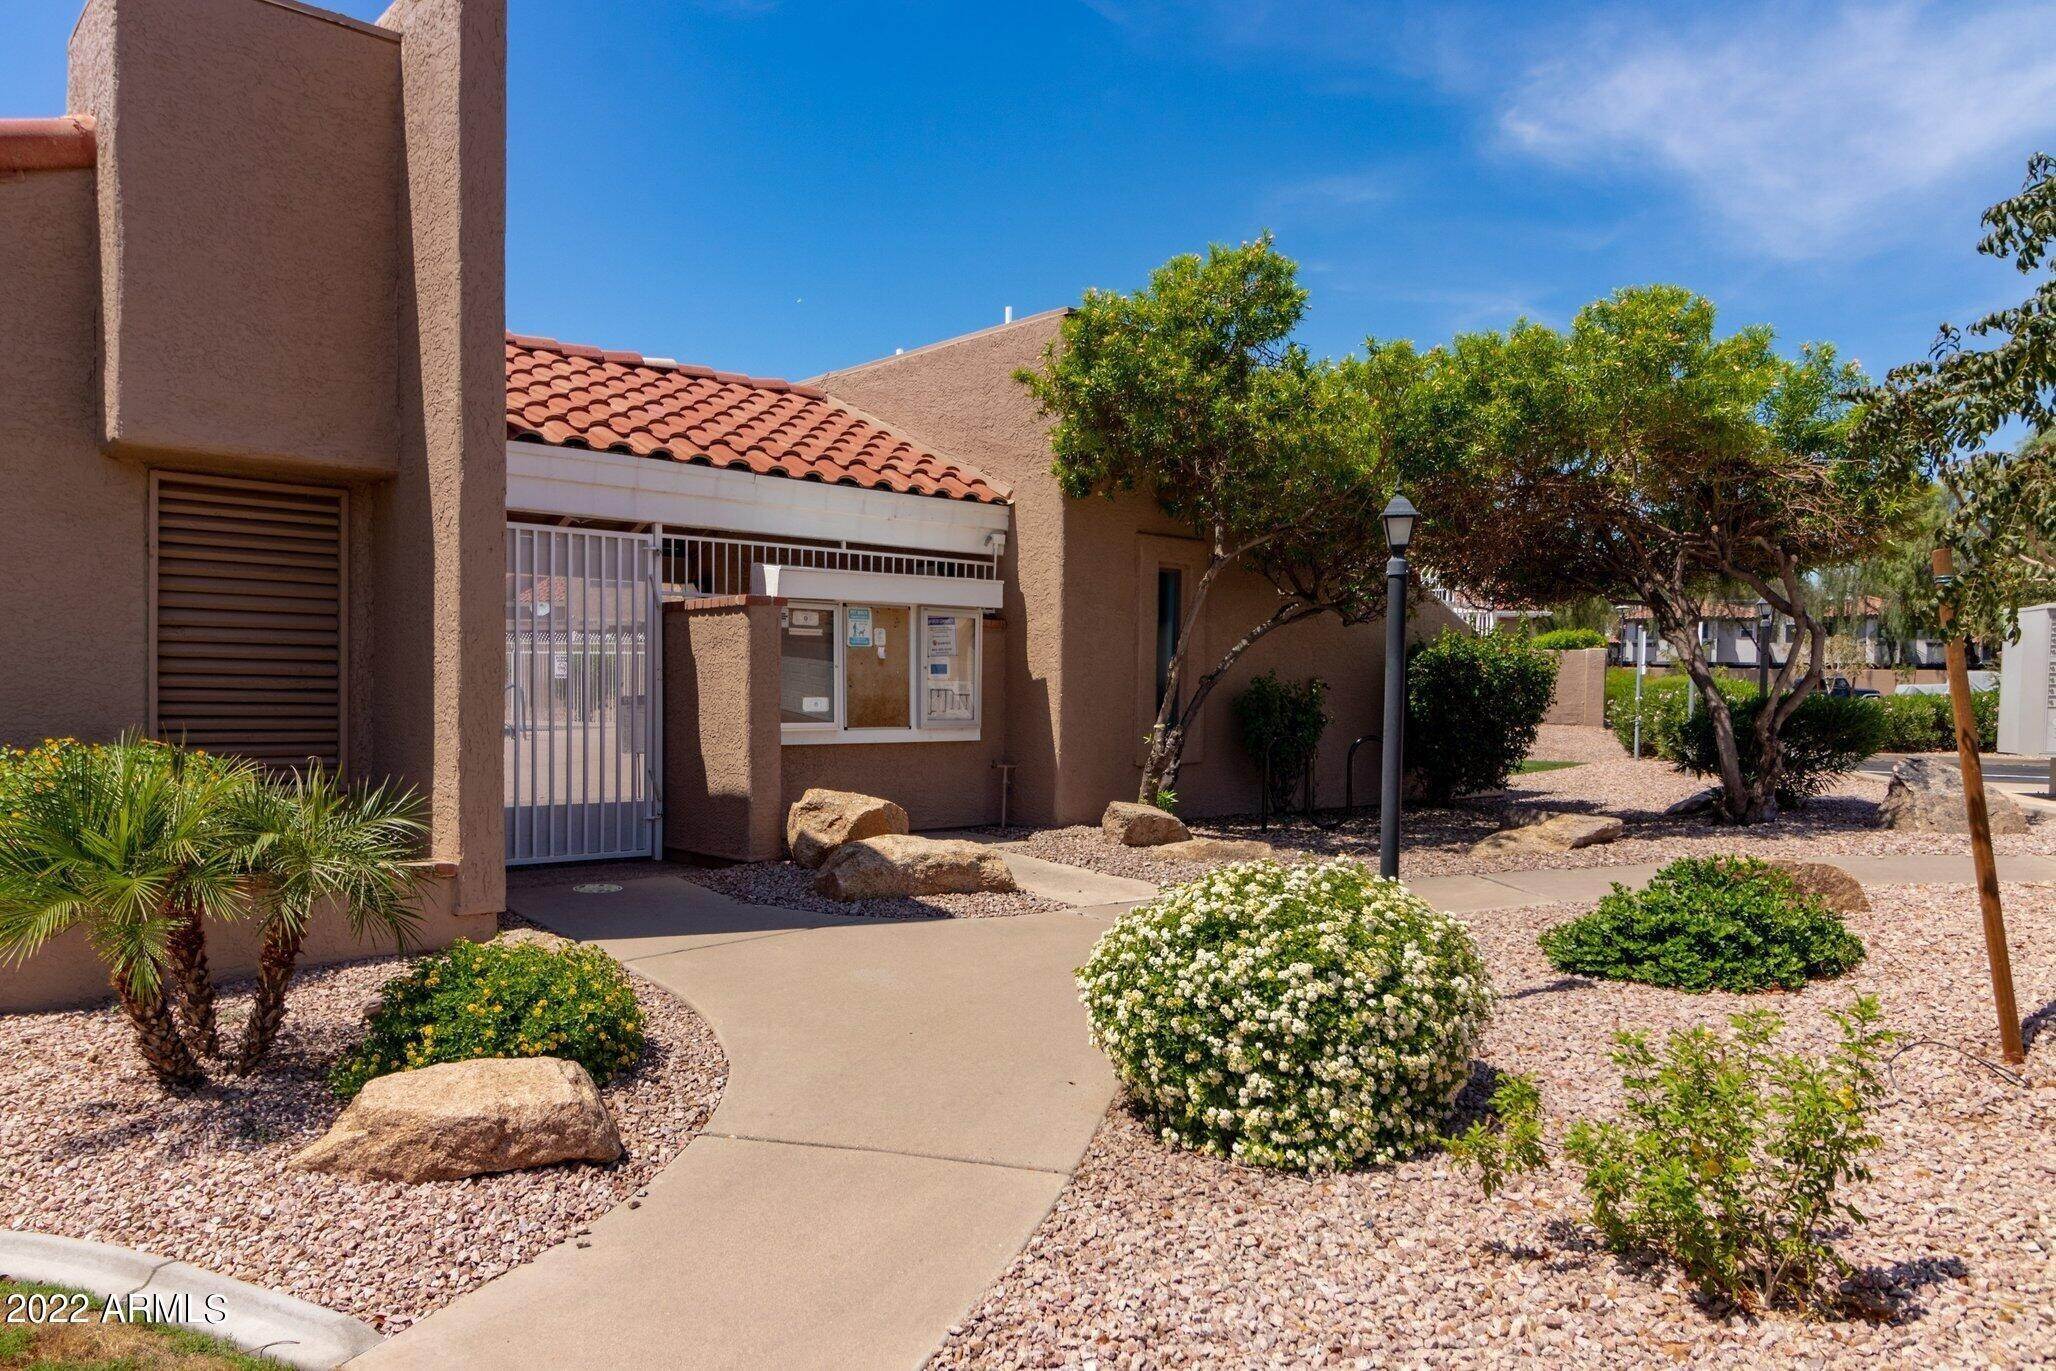 5. Townhouse for Sale at Mesa, AZ 85204